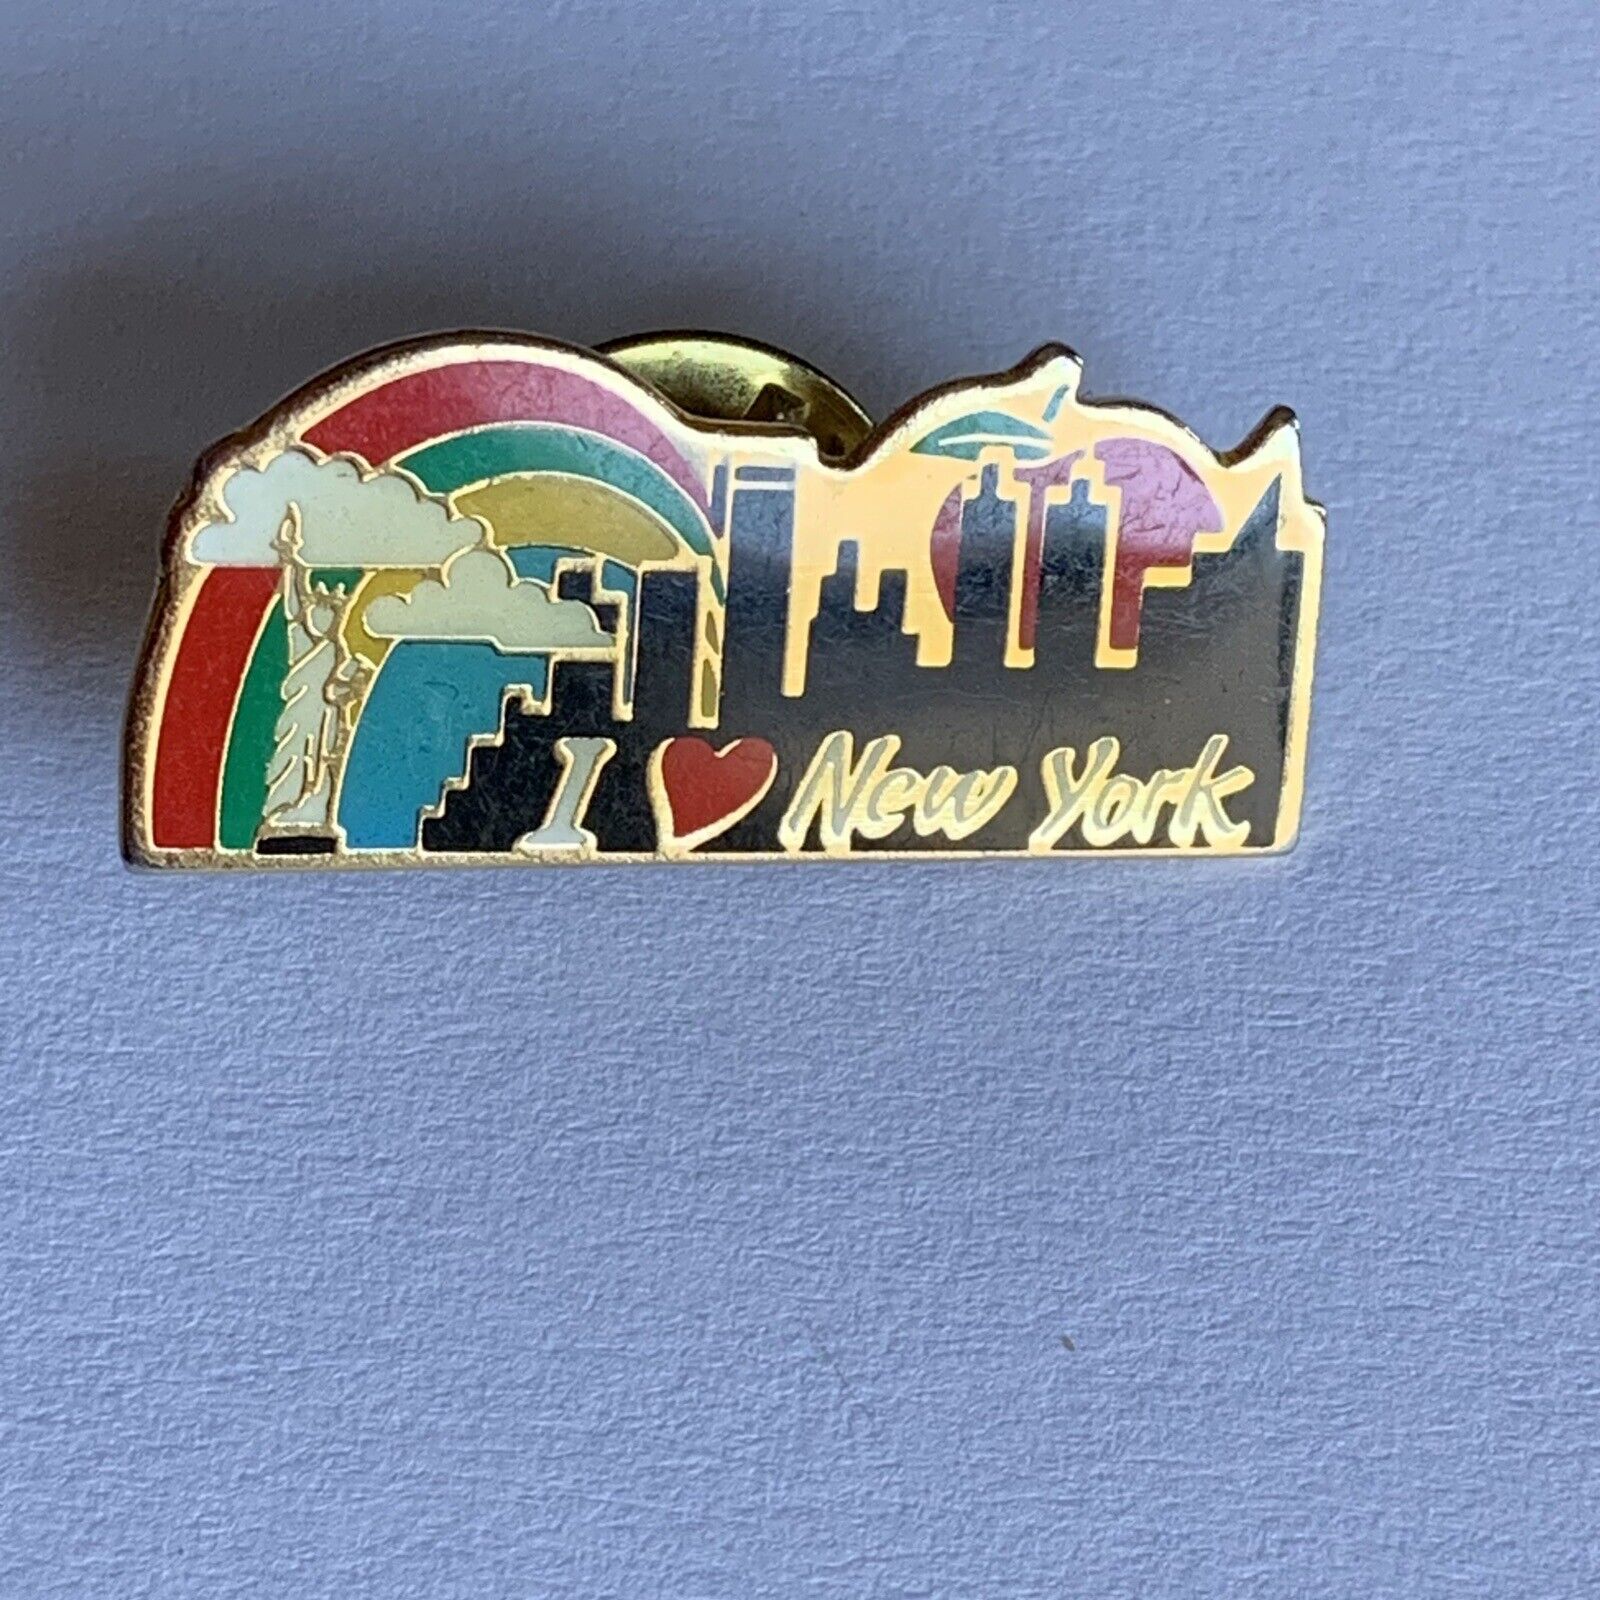 VTG I Heart Love New York The Big Apple Pin Epoxy Overlay Tie Tack w Twin Towers